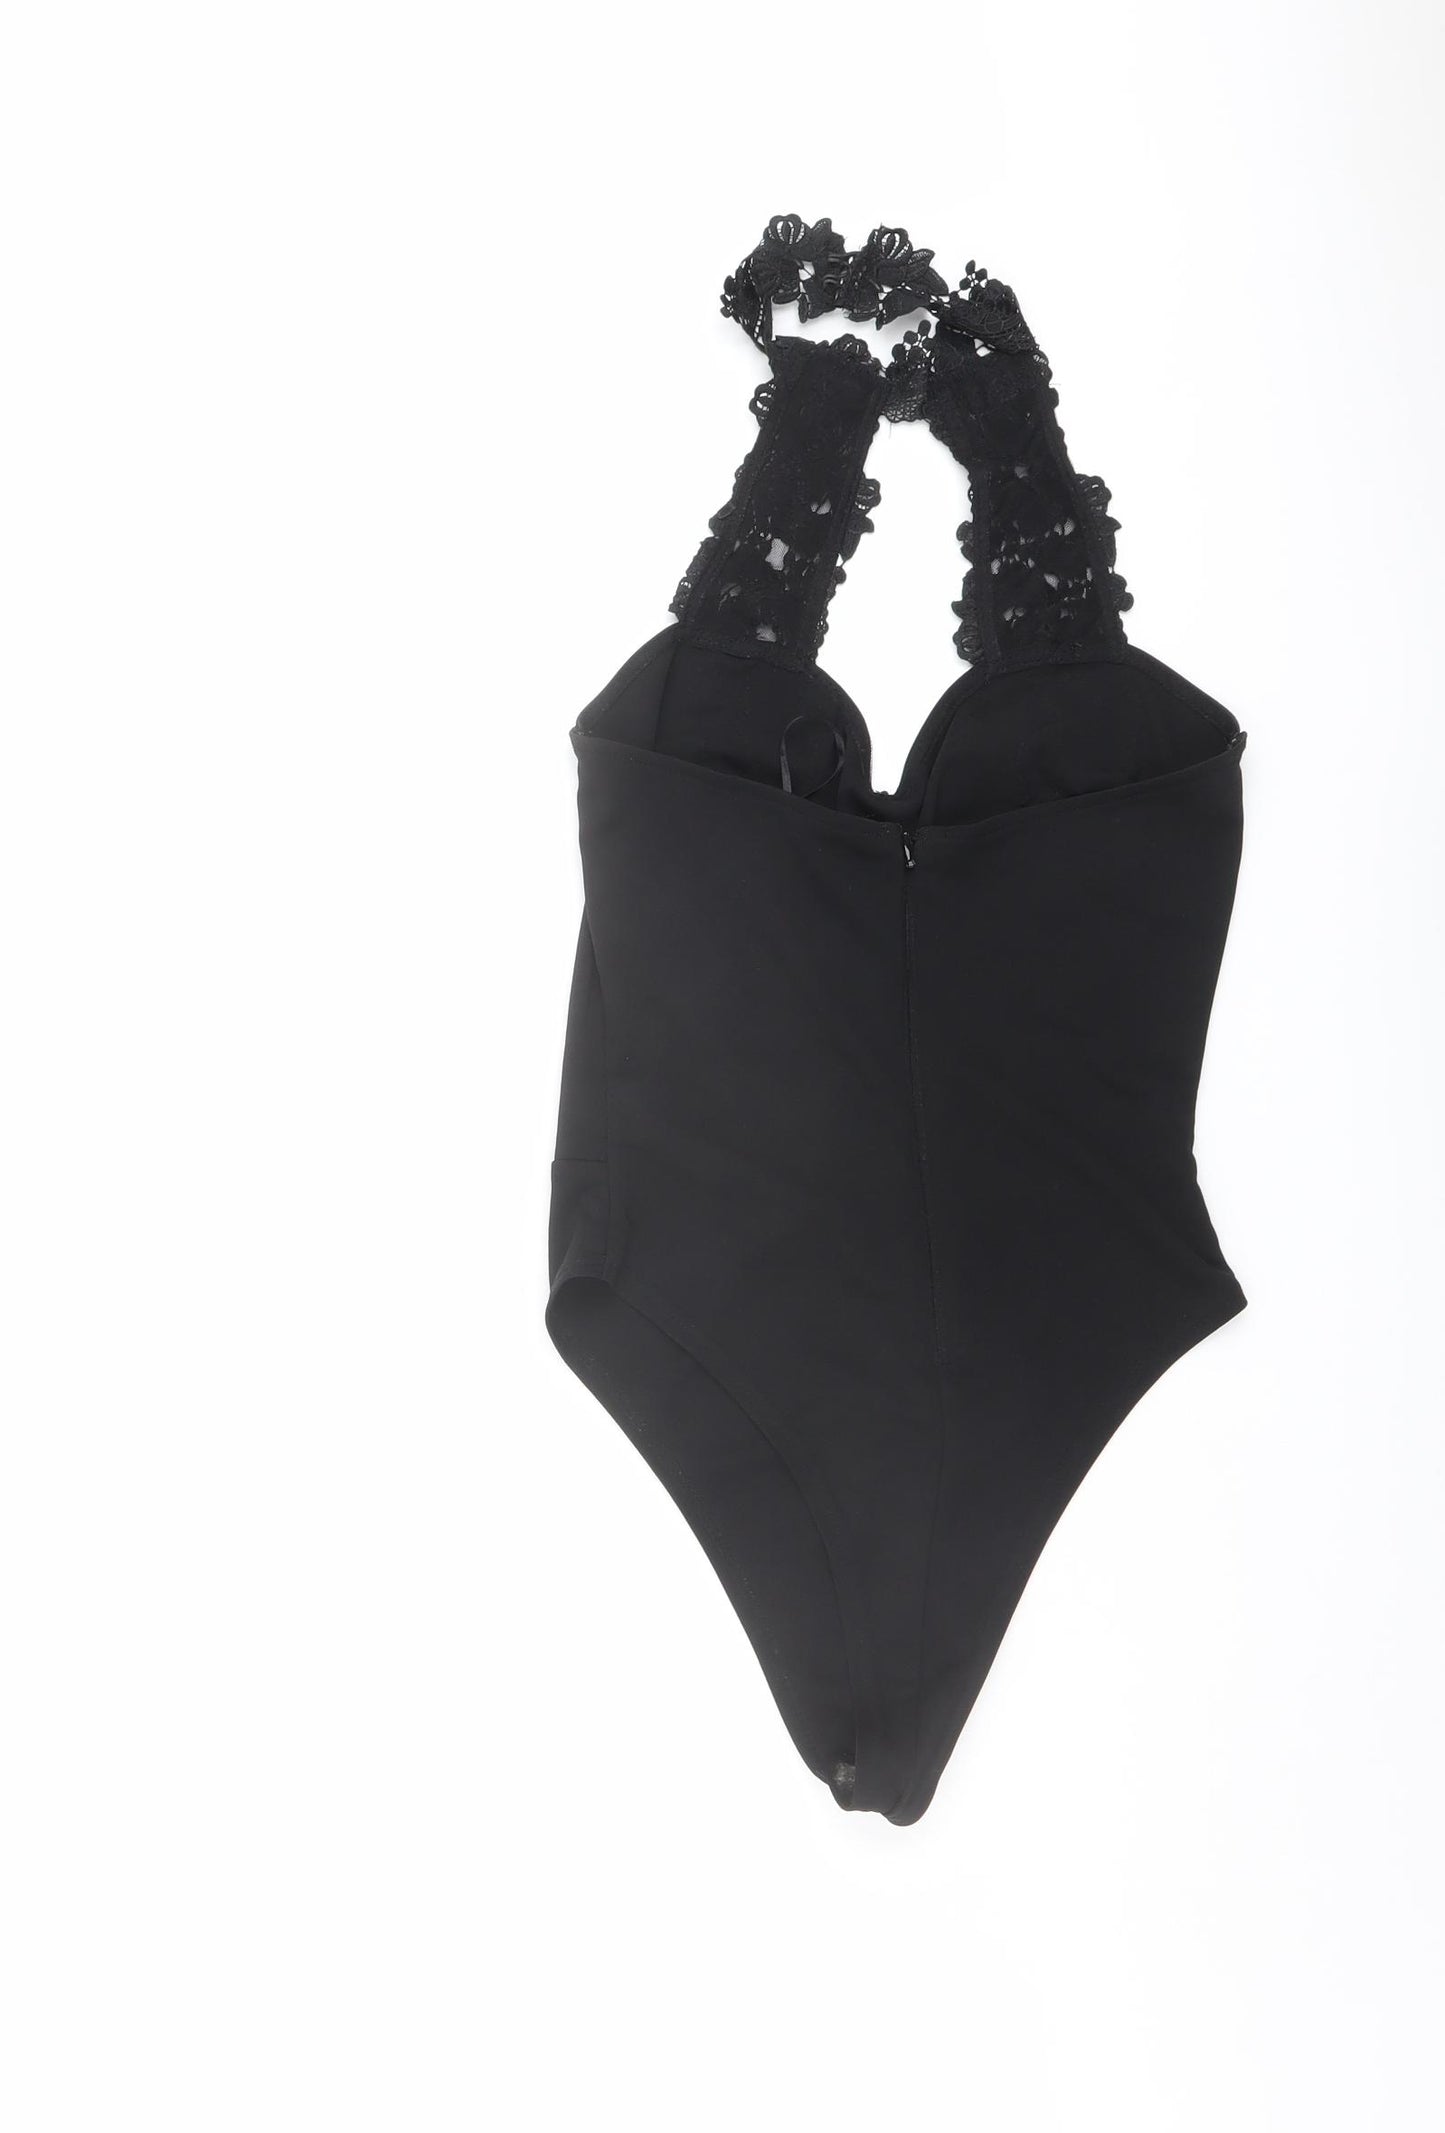 Lipsy Womens Black Polyester Bodysuit One-Piece Size 8 Snap - Lace Neckline